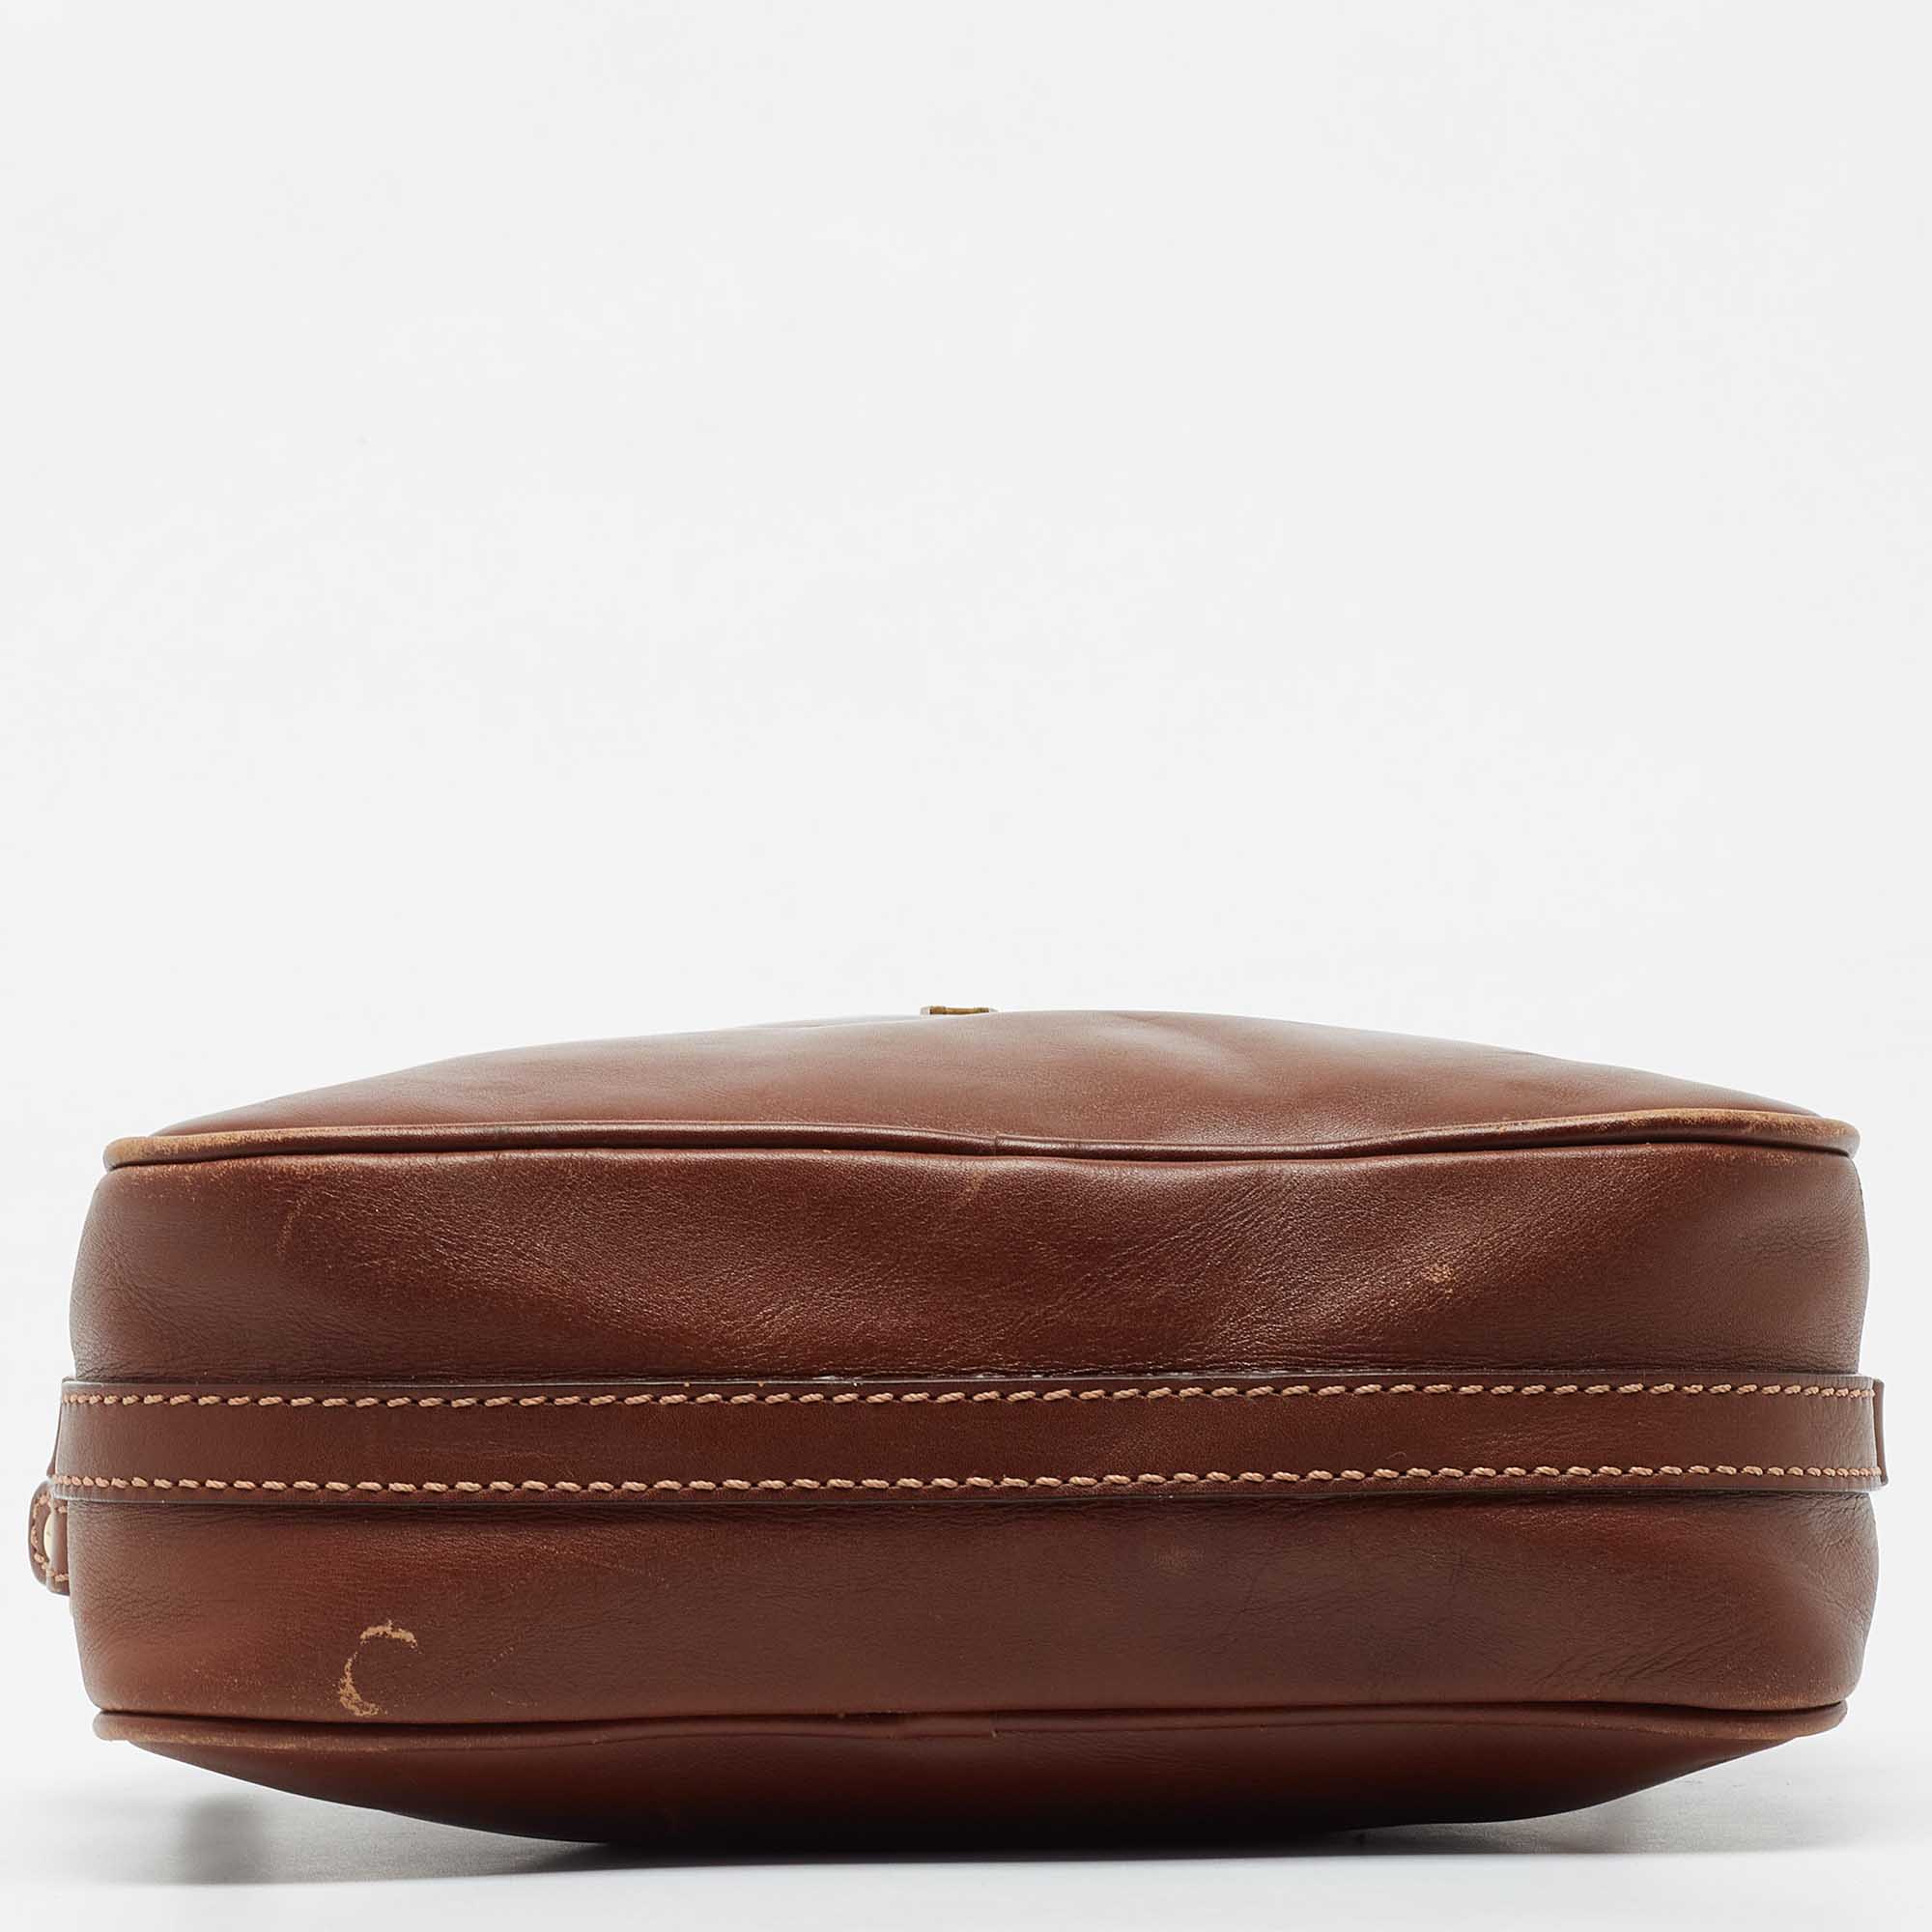 Aigner Brown Leather Crossbody Bag